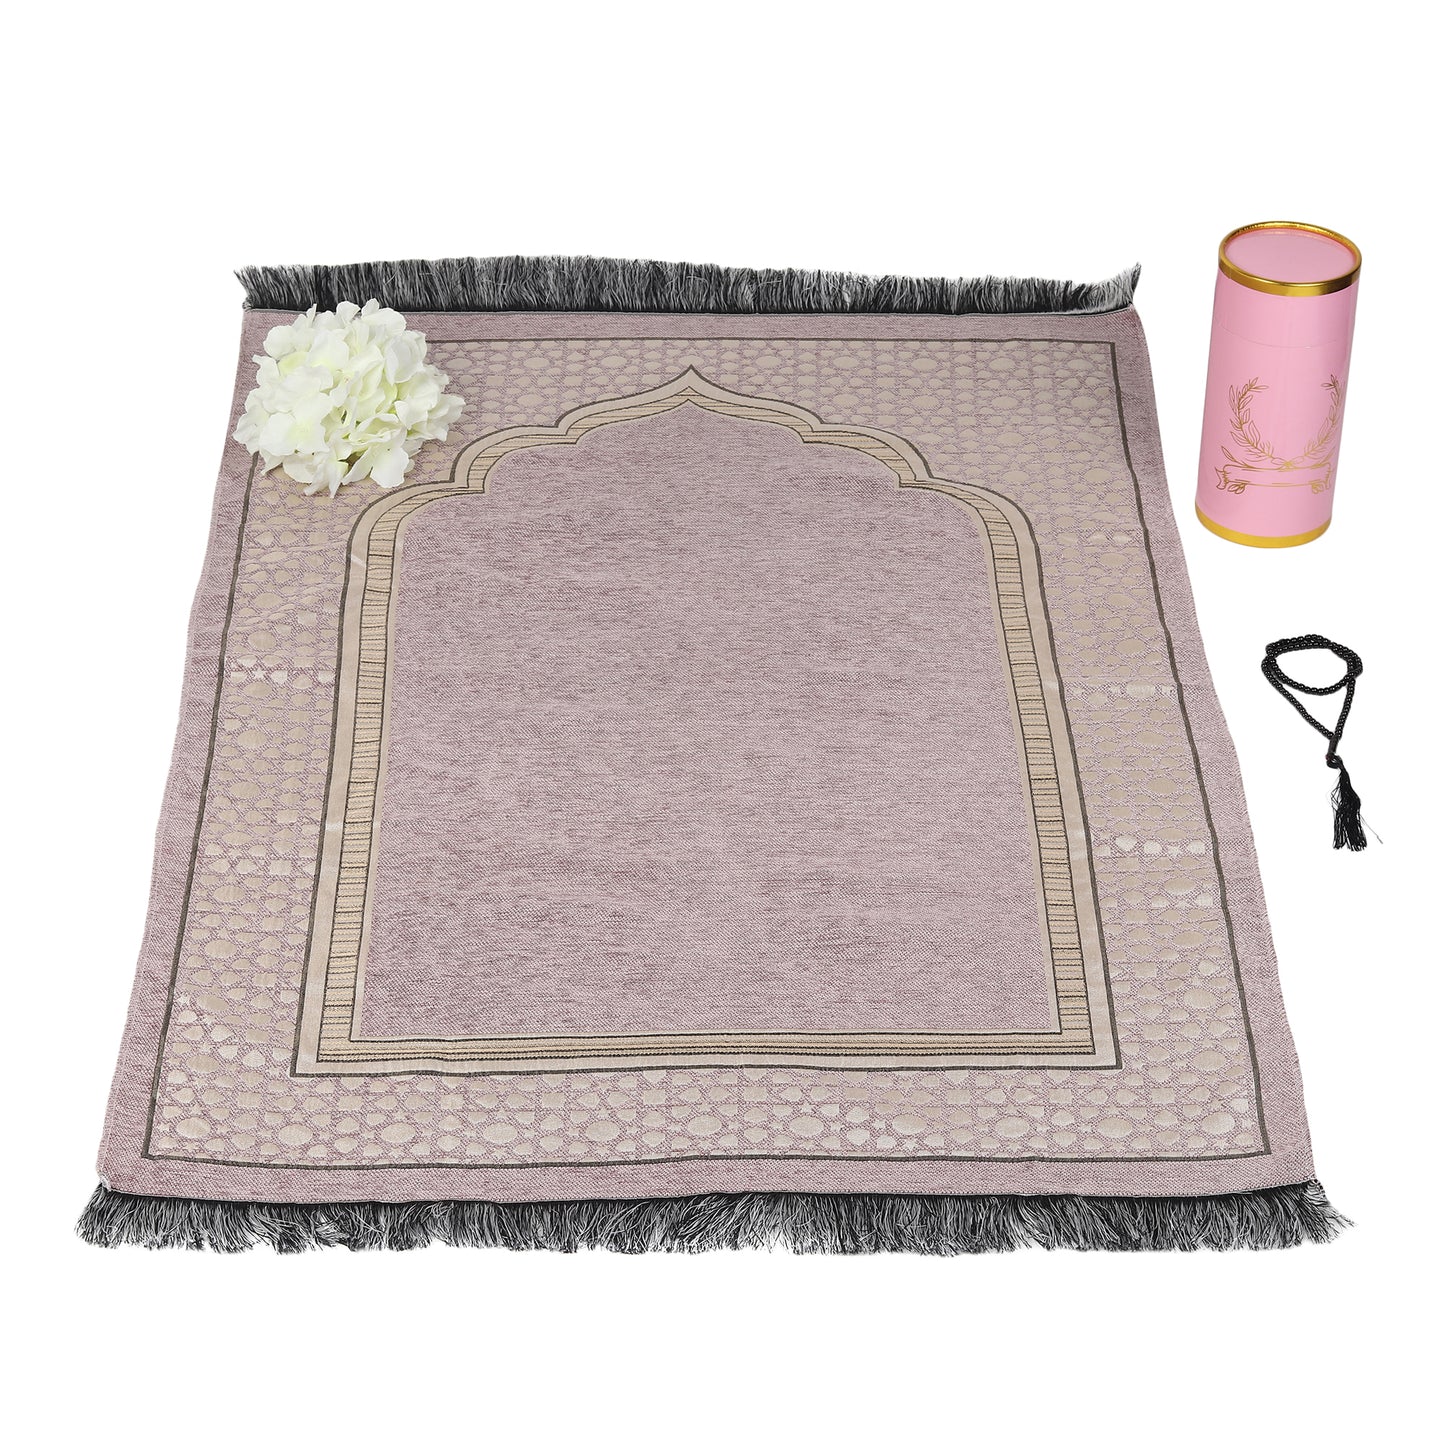 Intricate Design Cylinder Gift Box with Muslim Prayer Rug & Prayer Beads | Islamic Gifts Set | Prayer Carpet Mat, Pink